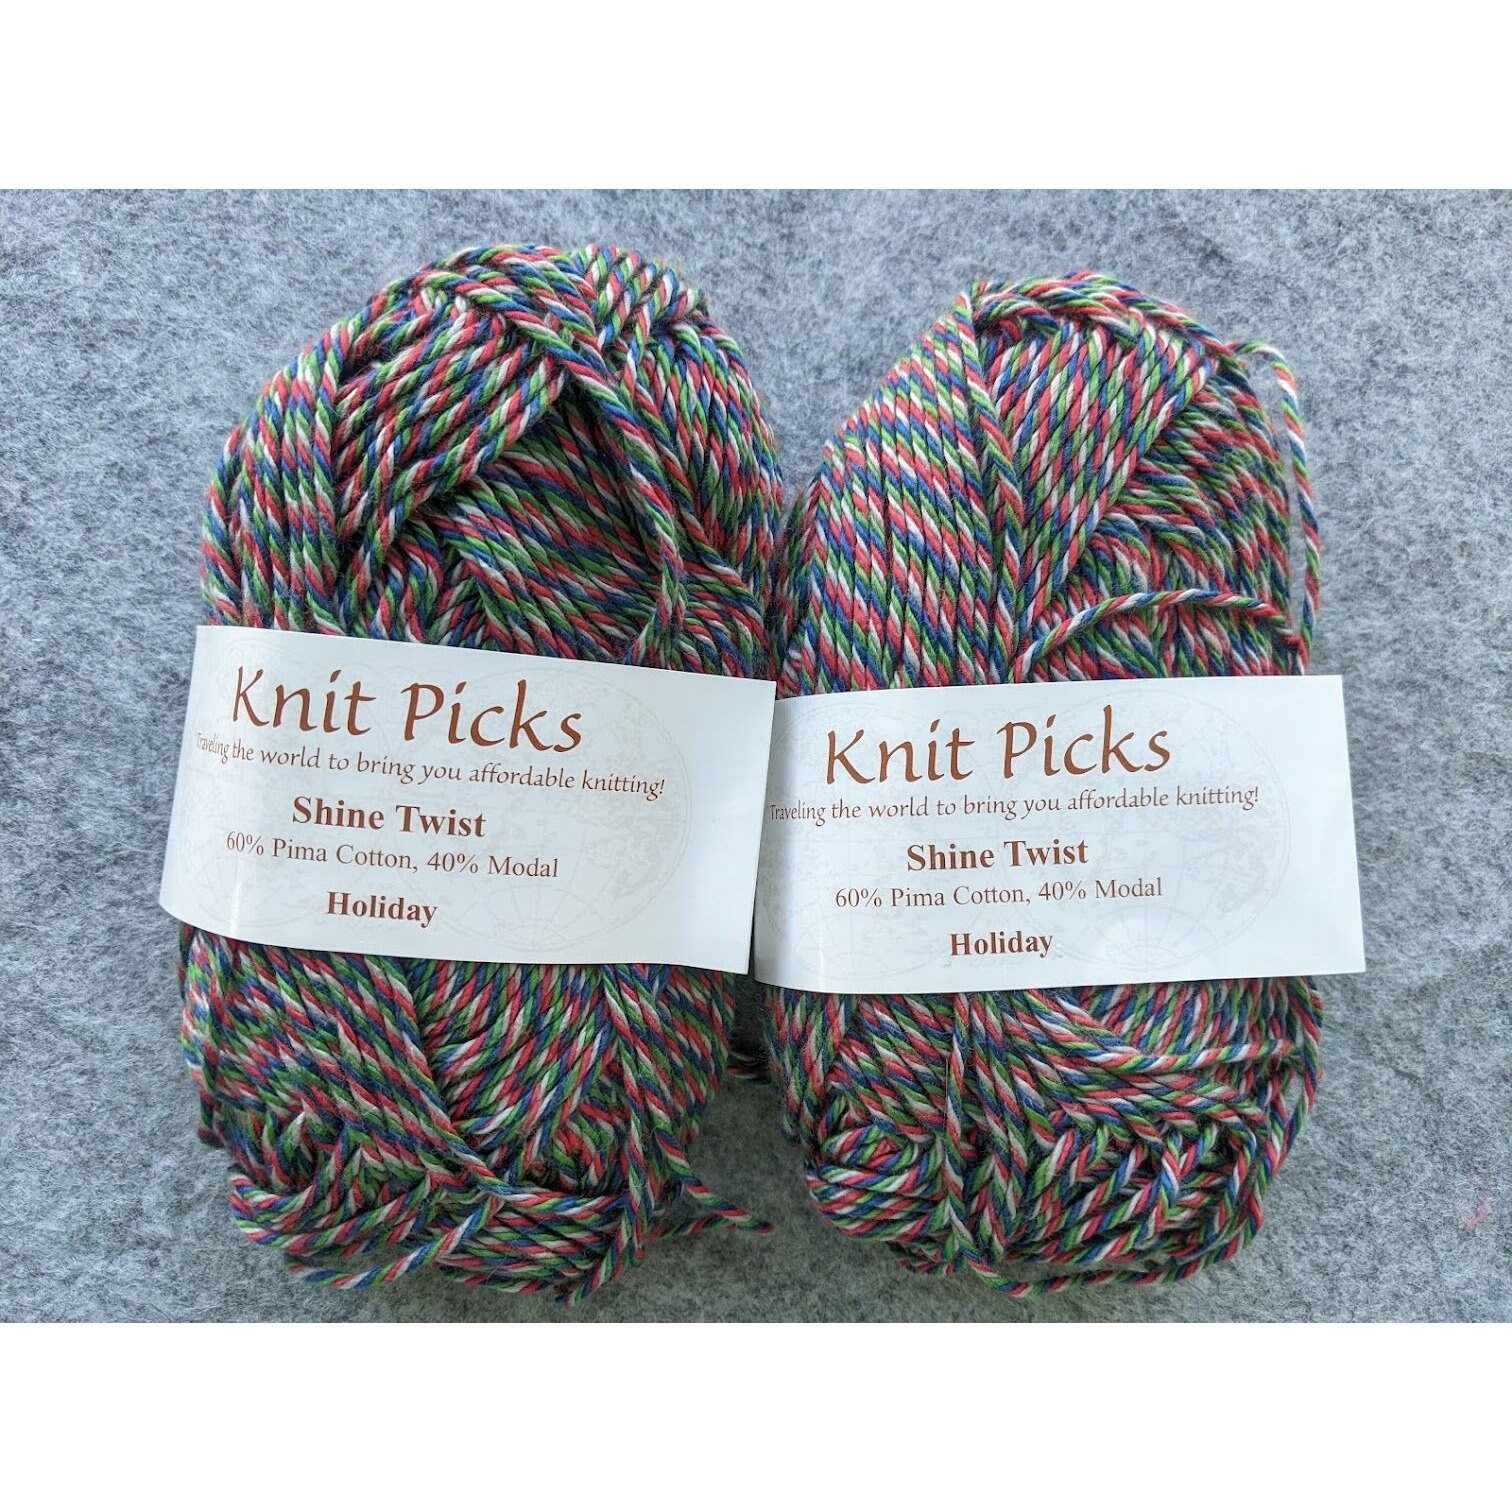  Knit Picks